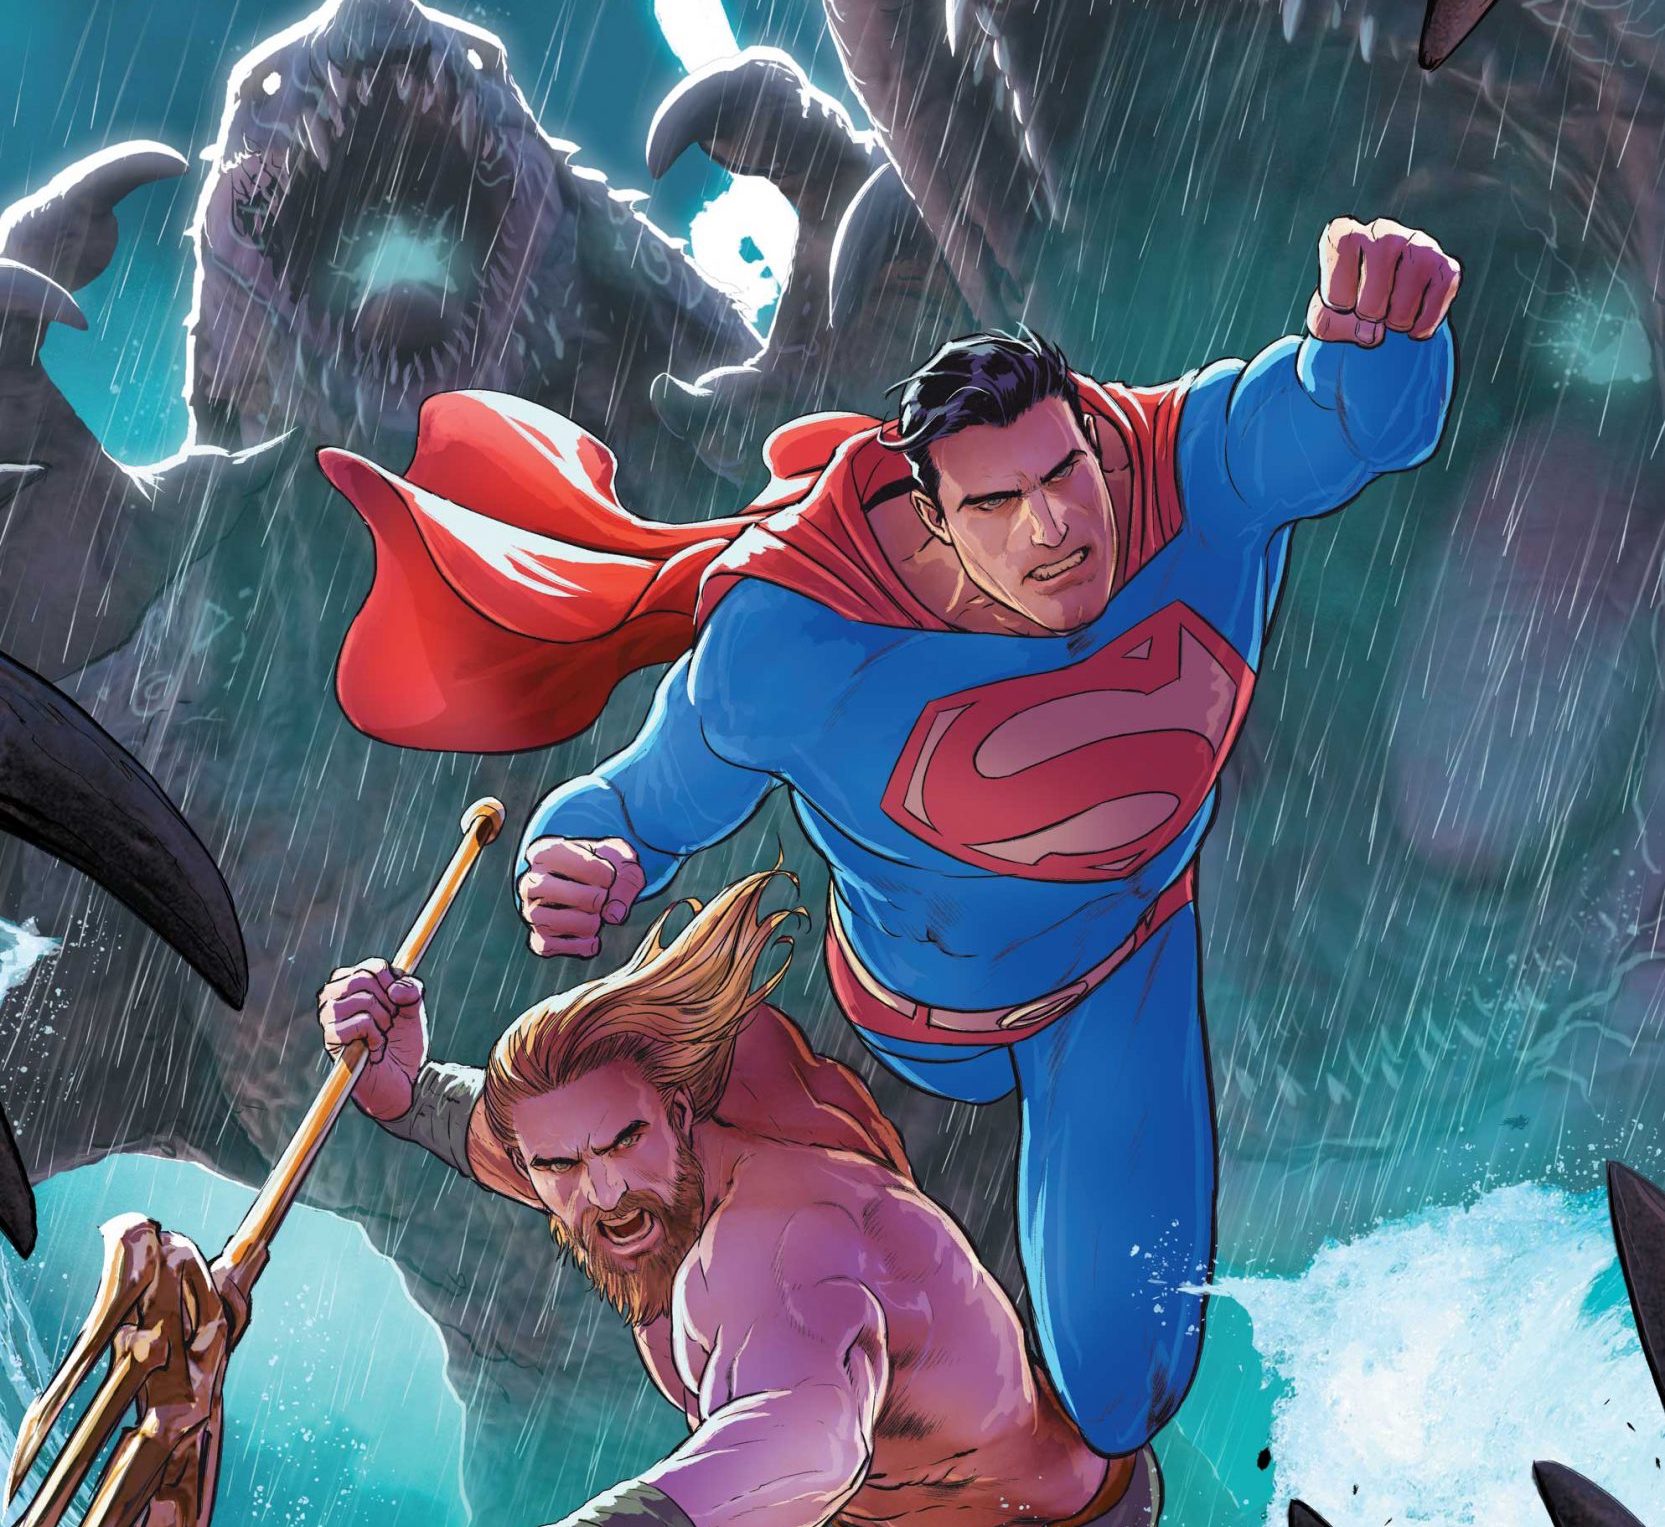 'Action Comics' #1032 features Superman vs. a kaiju – who ya got?